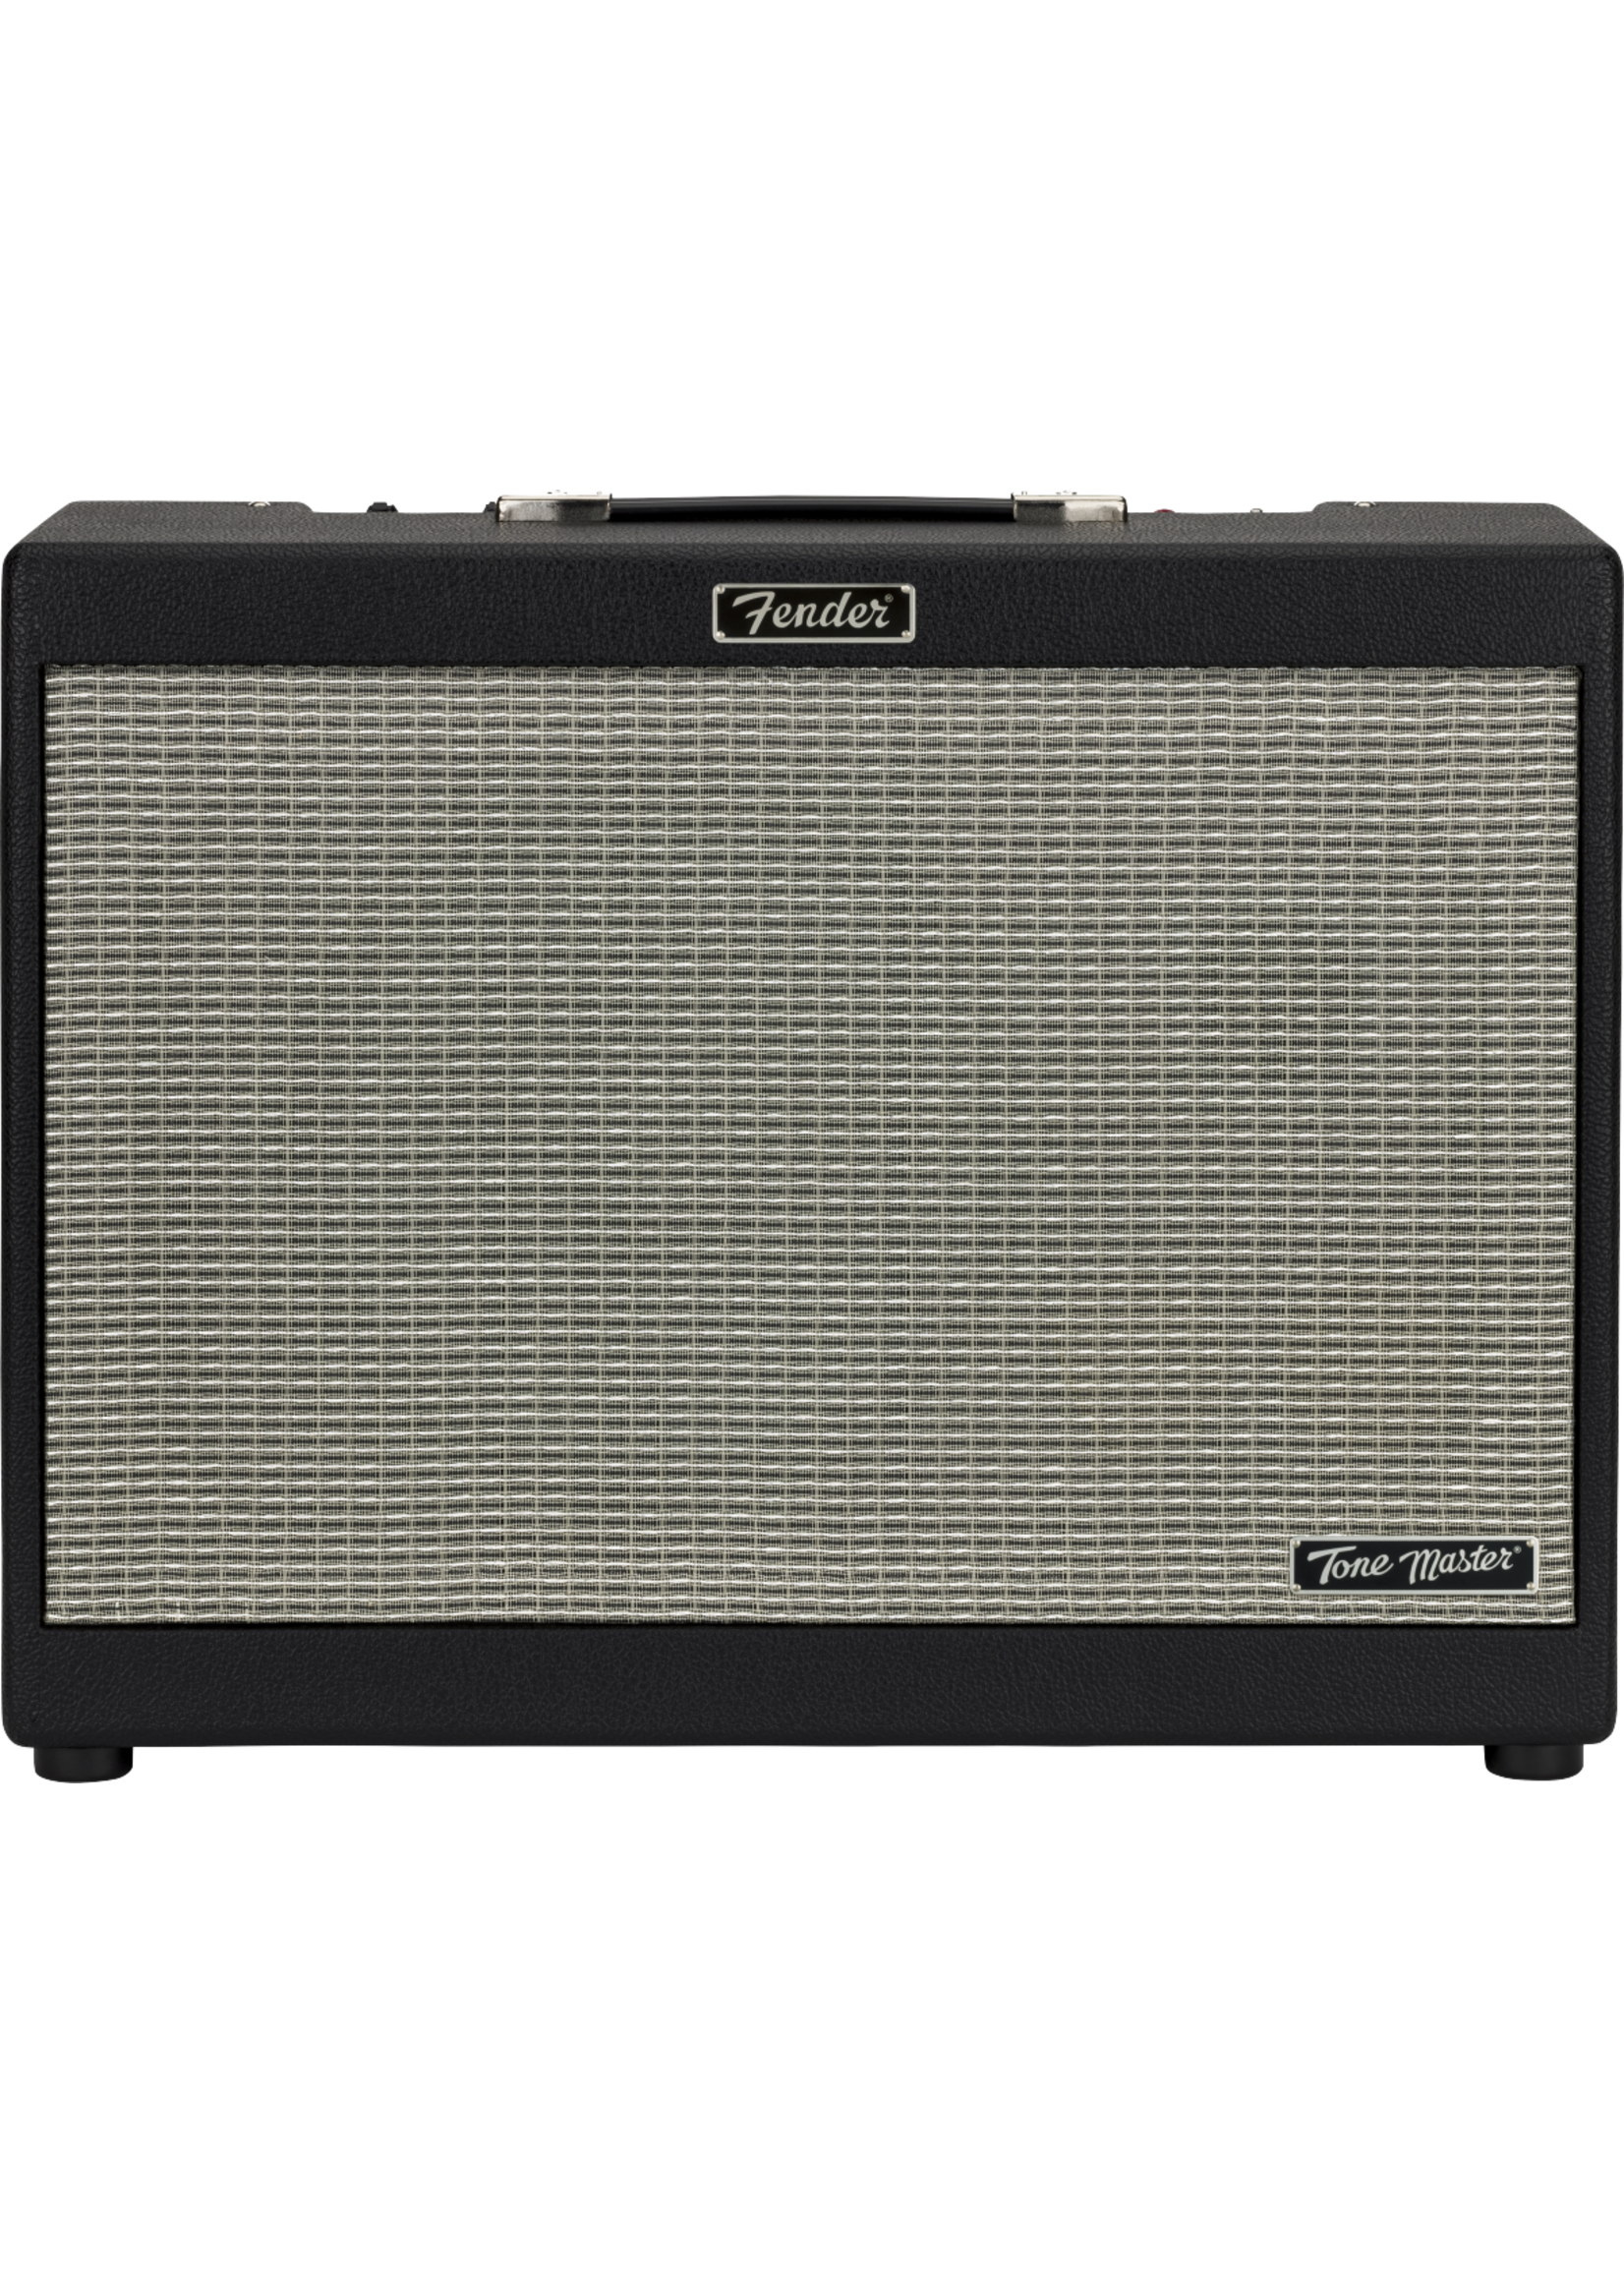 Fender Fender Tonemaster FR-12 Amplifier